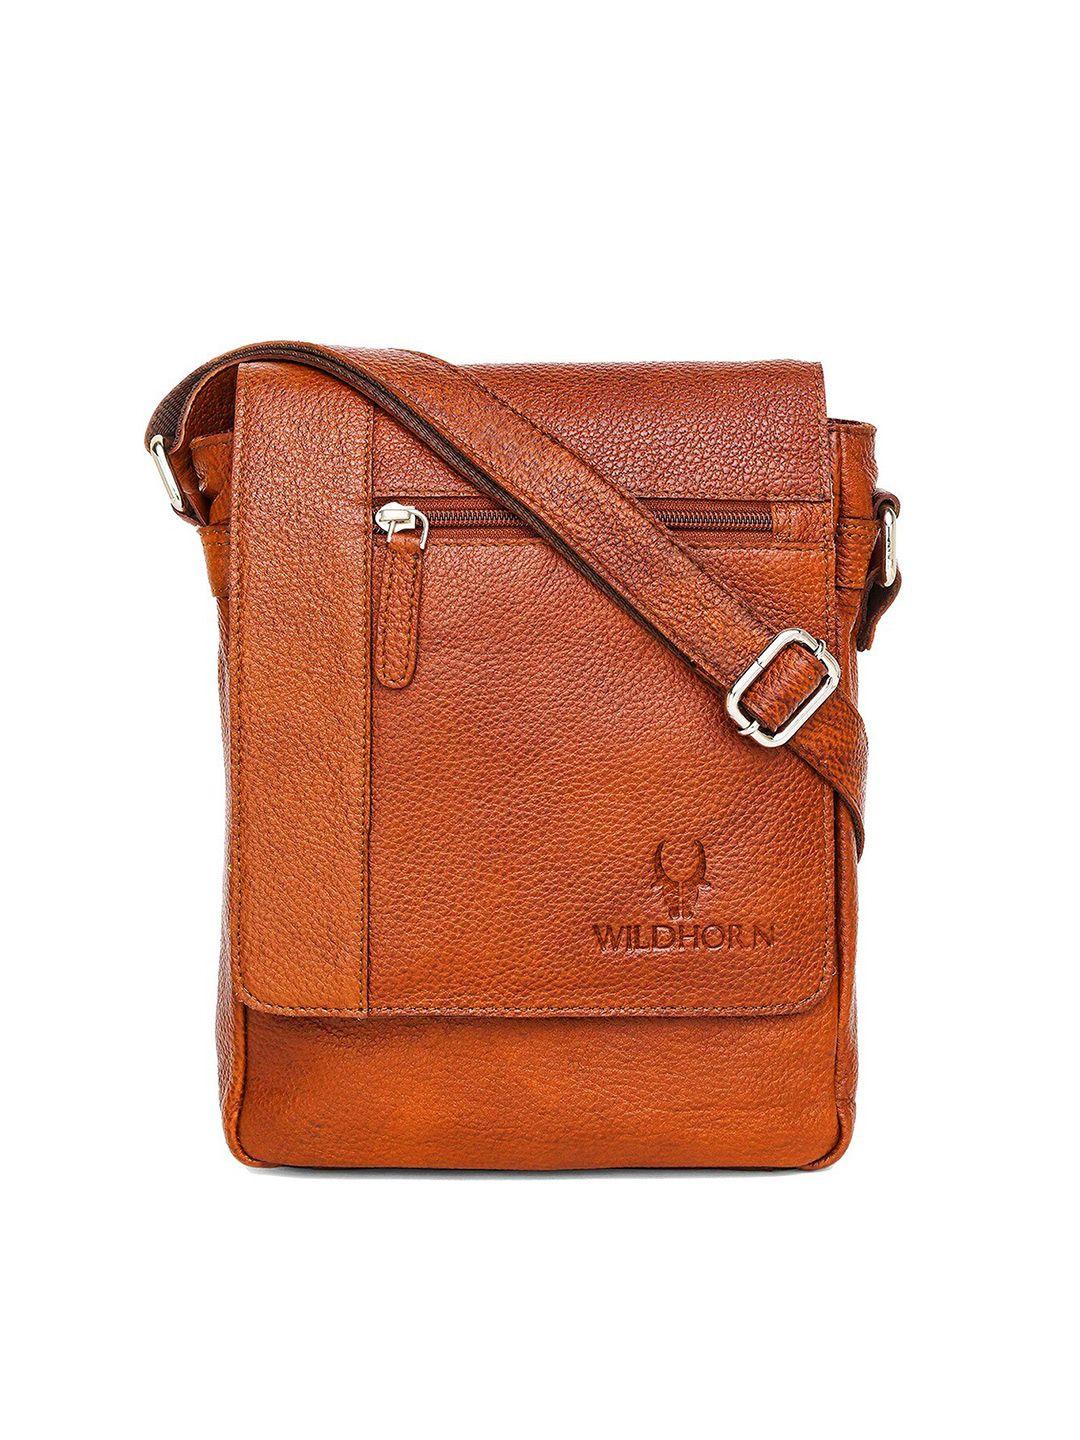 wildhorn men tan genuine leather messenger bag